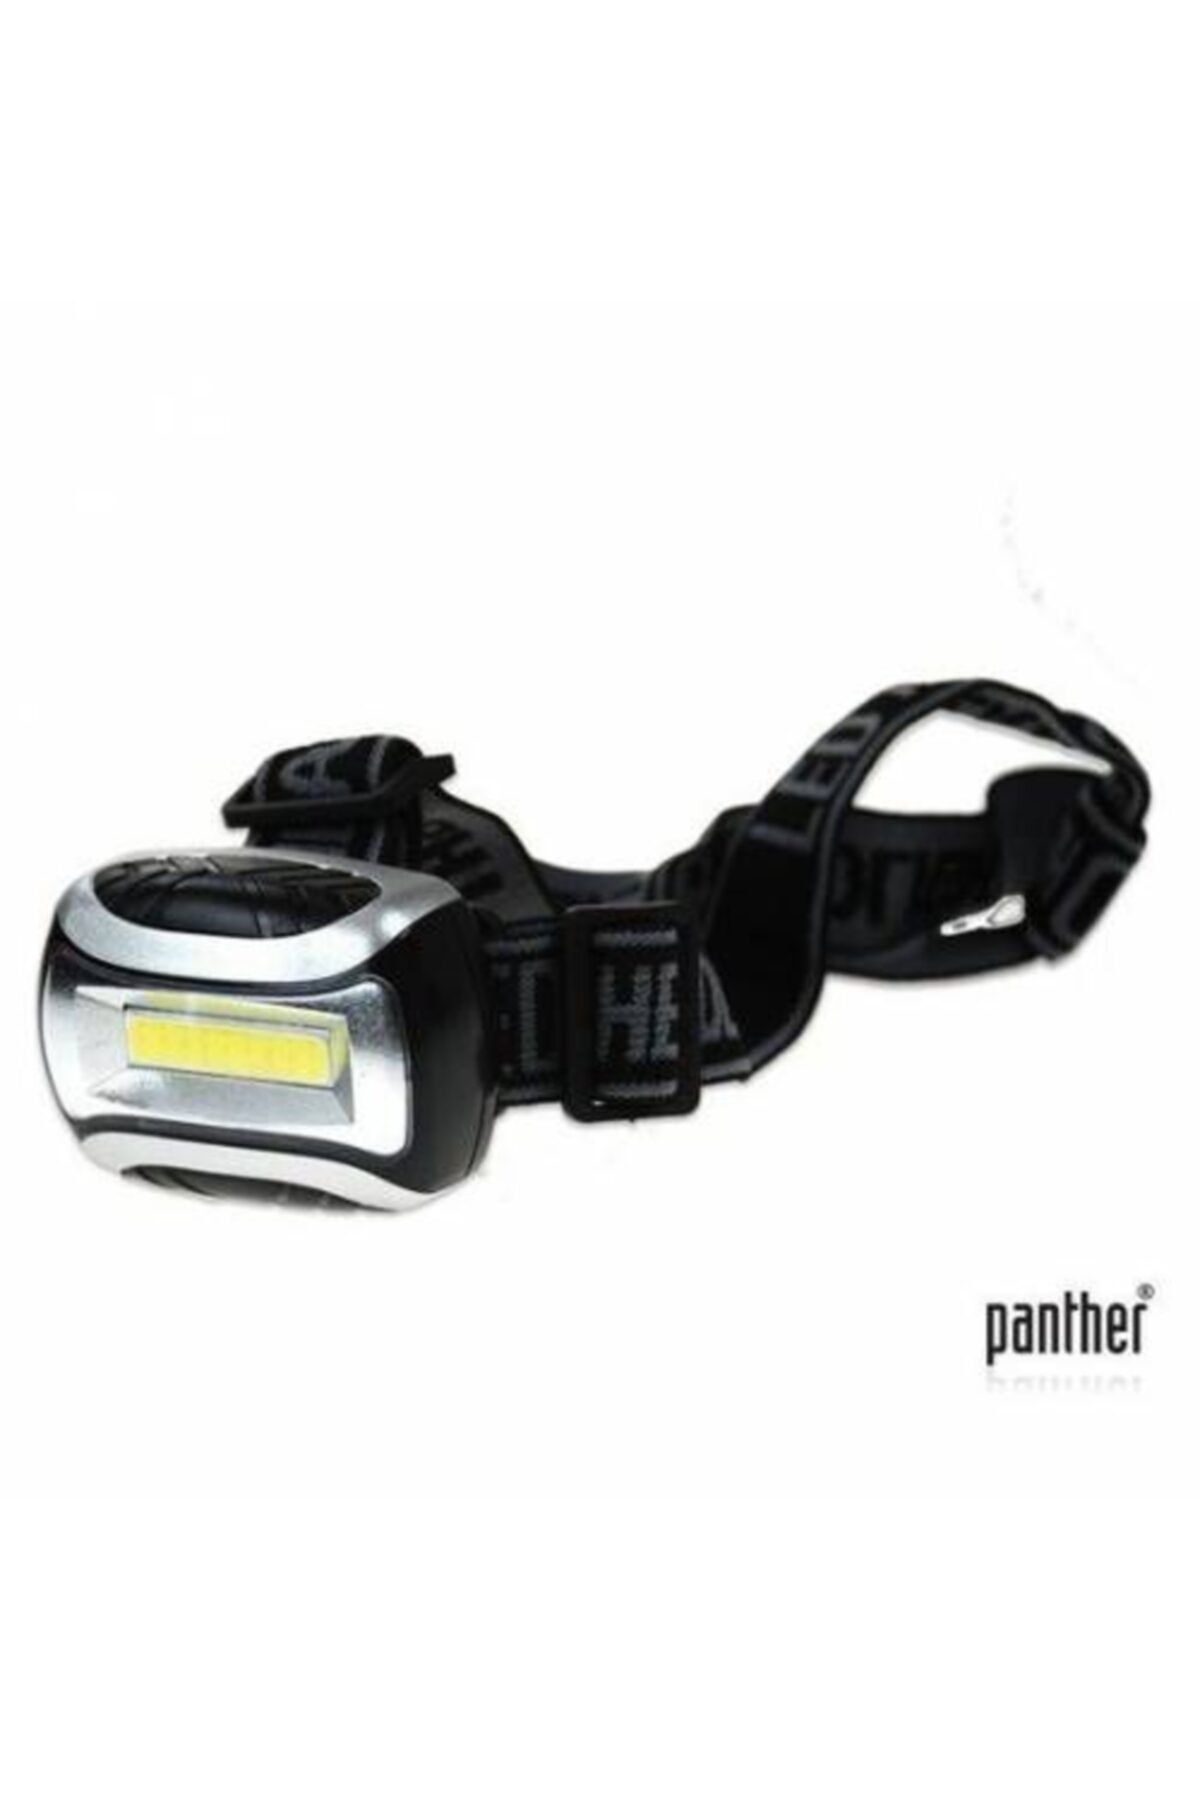 Panther Pt-5018 3w 200 Lümen Süper Parlak Cob Led Kafa Feneri Kafa Lambası